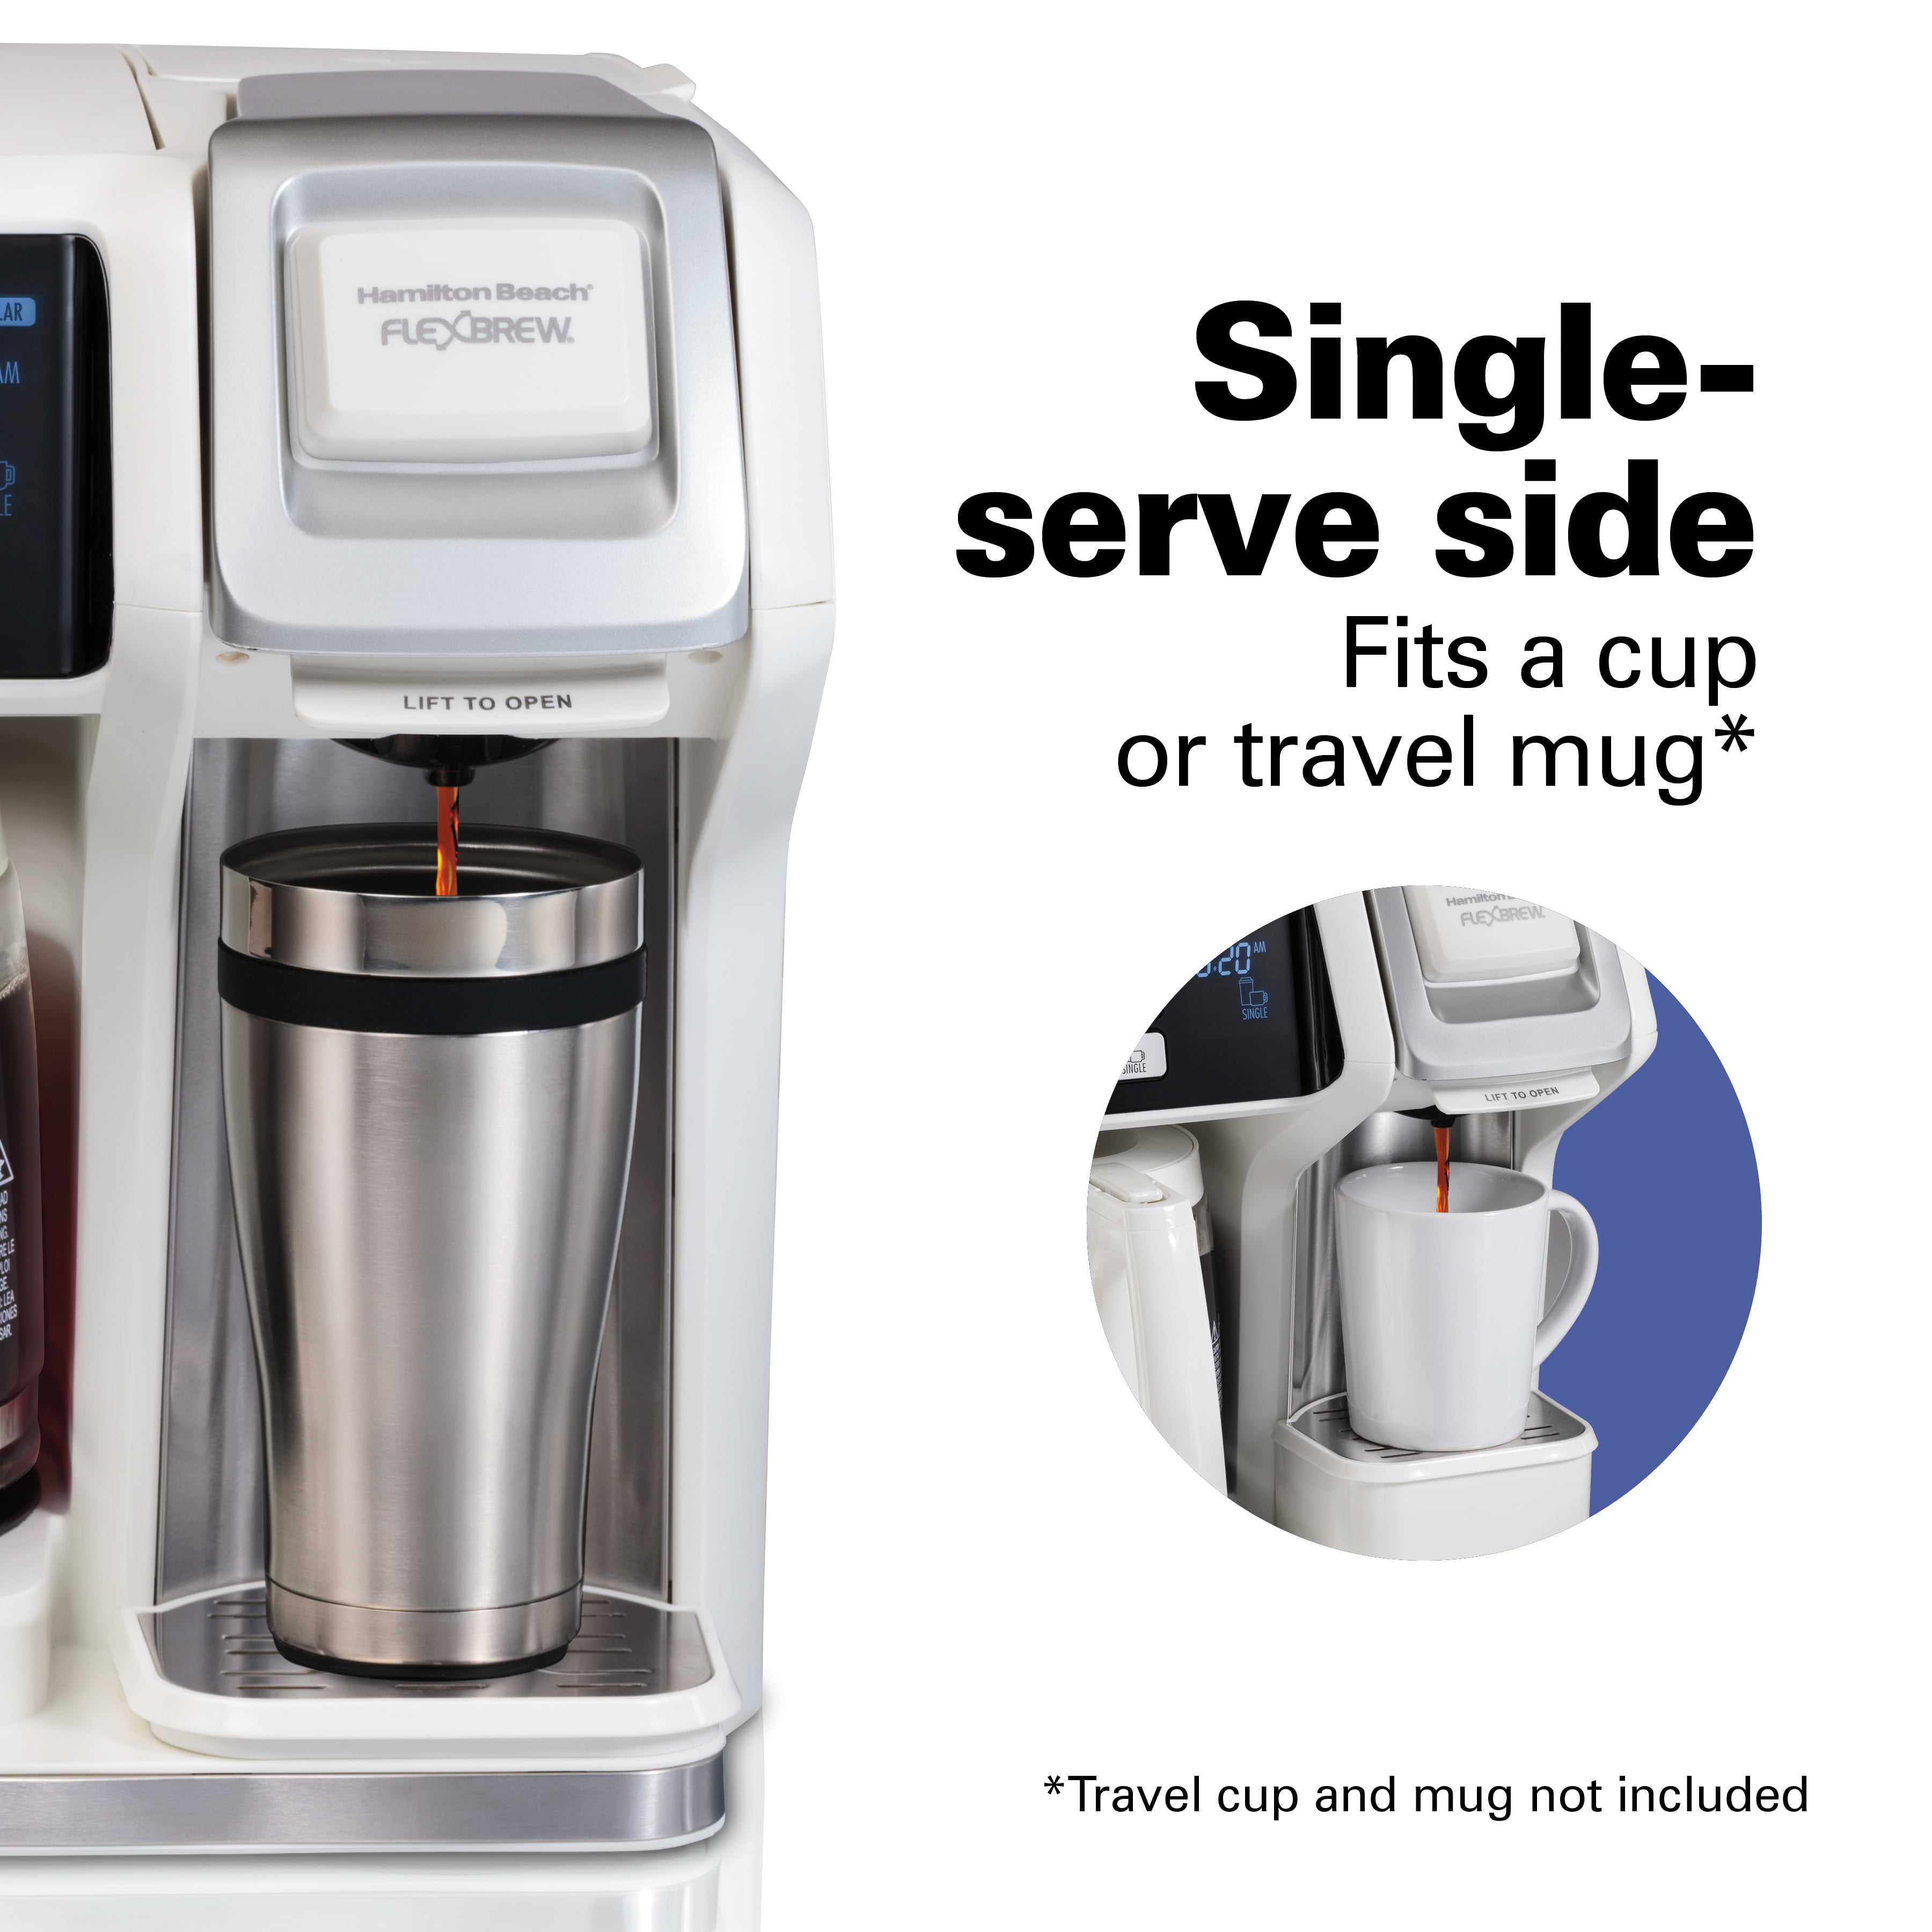 Hamilton Beach FlexBrew Trio Coffee Maker 2-way Single Serve and Full 12 Cup